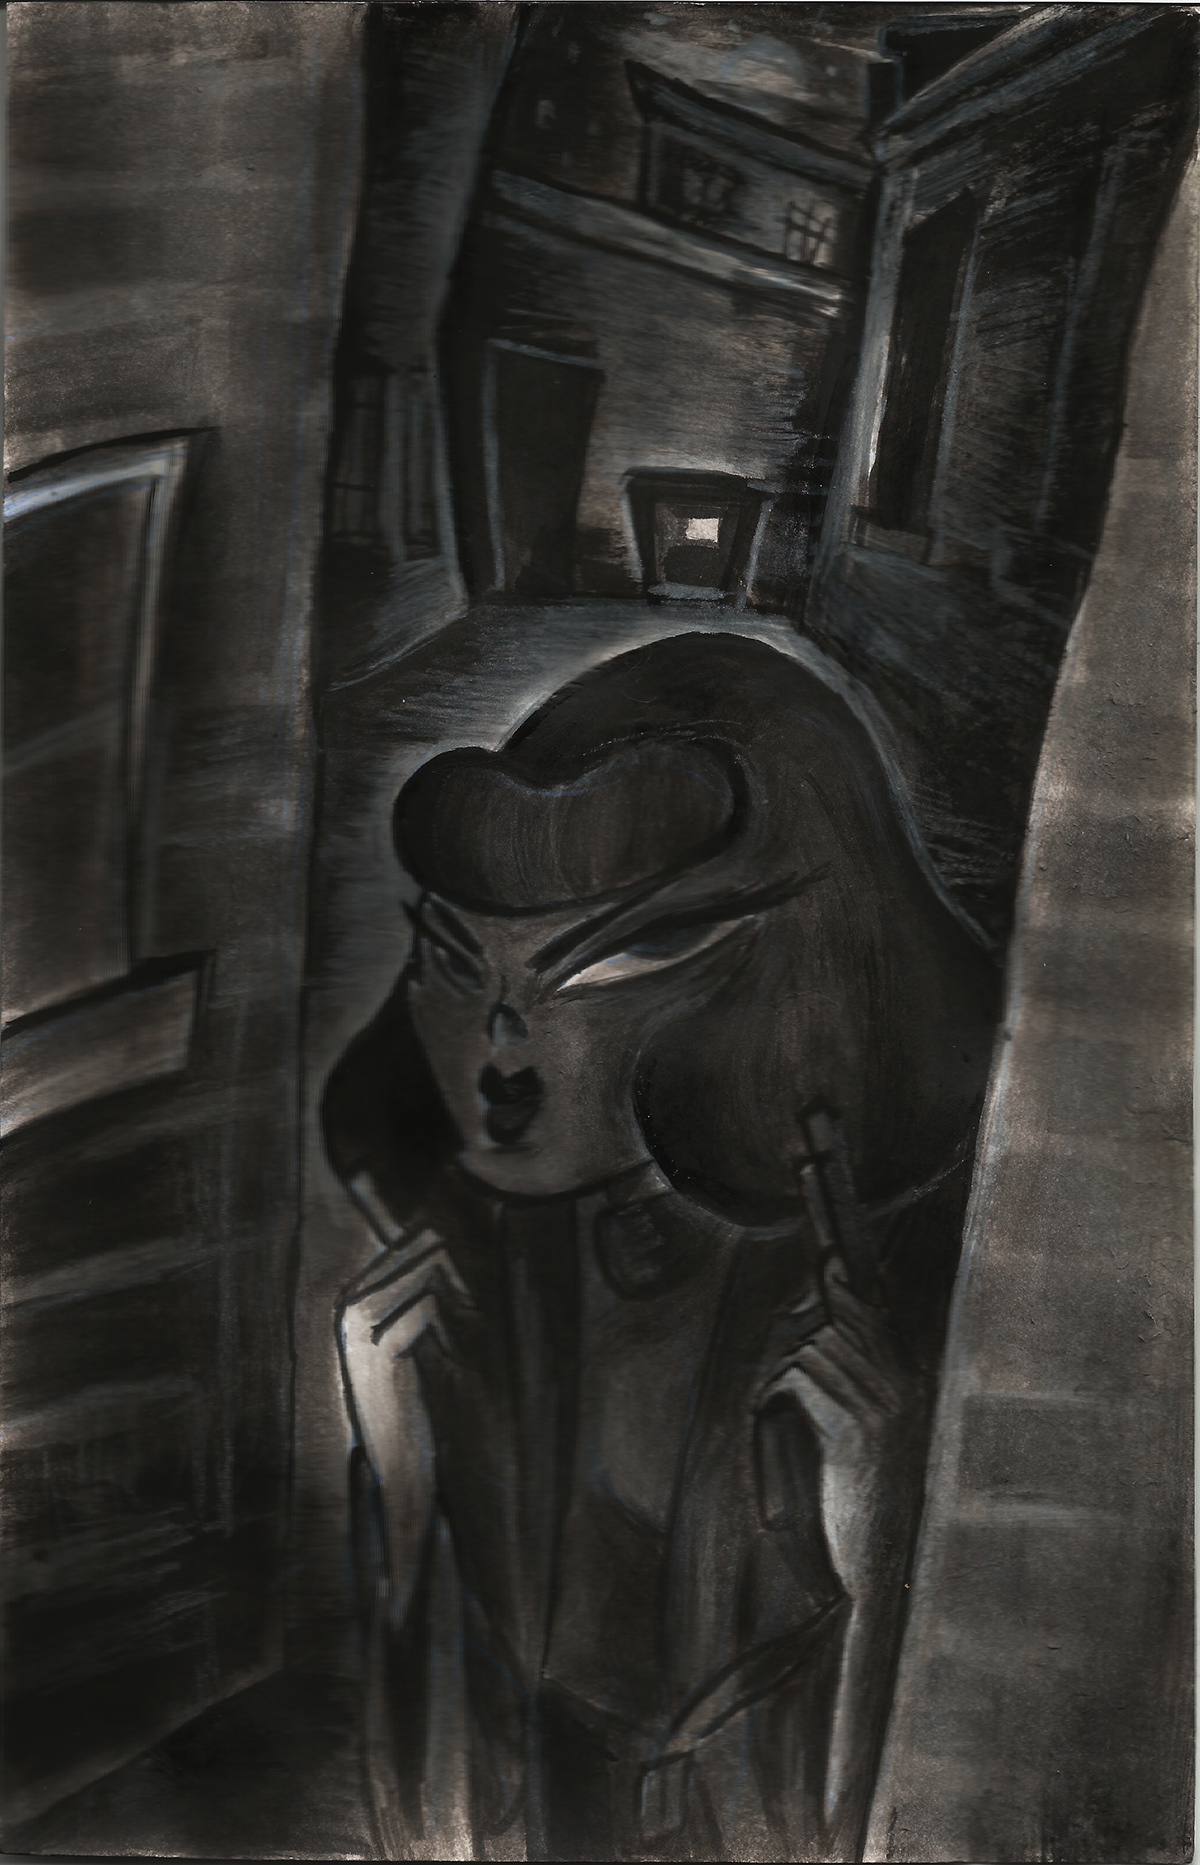 ink film noir noir girl Gun 1940s vintage Lowbrow Art Retro